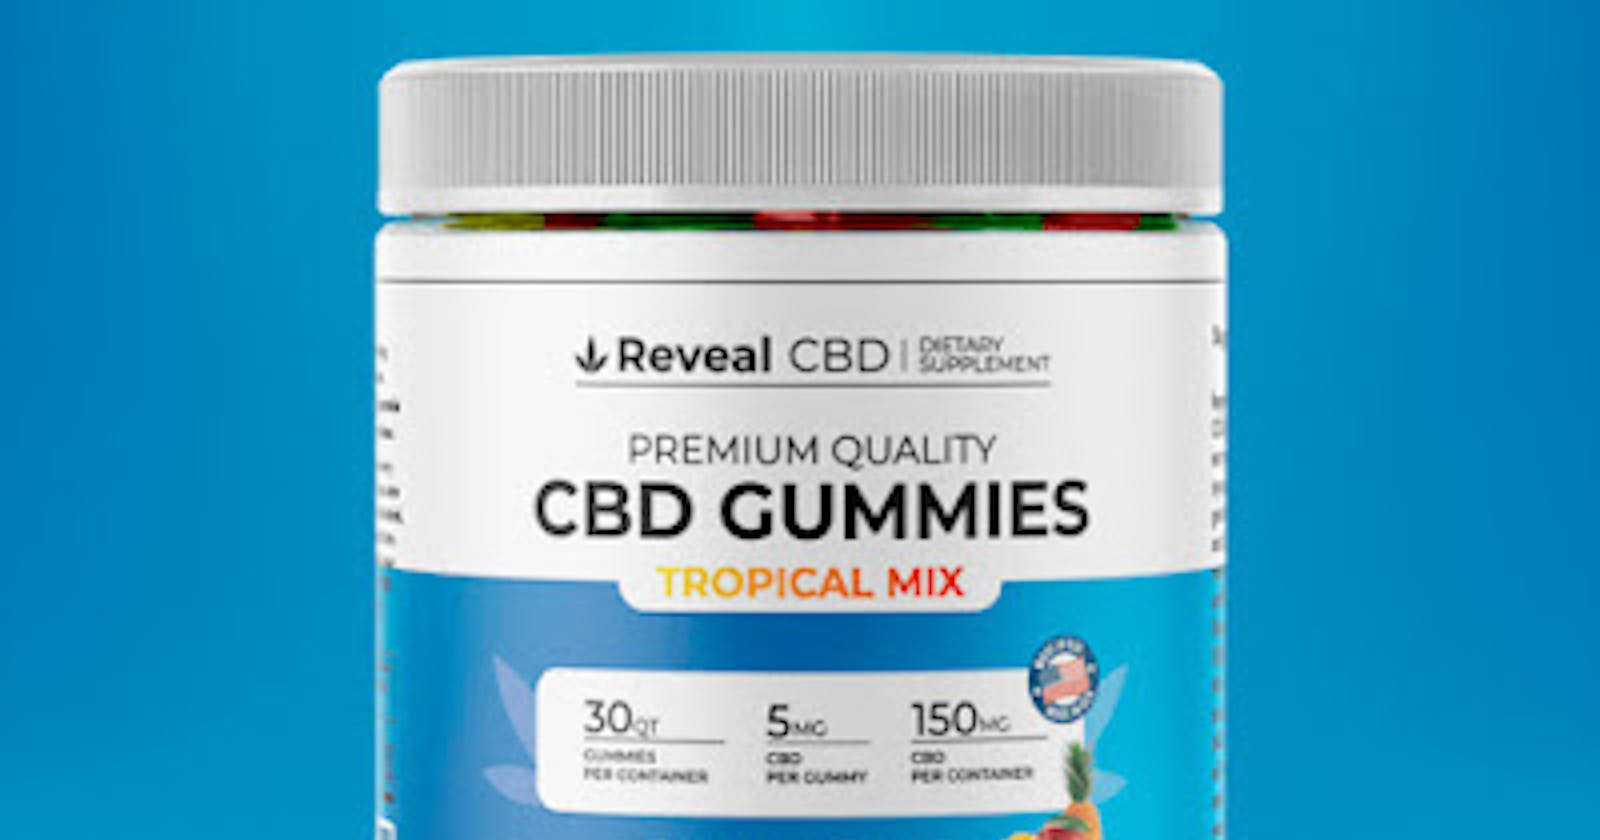 "The Benefits of Reveal CBD Gummies"